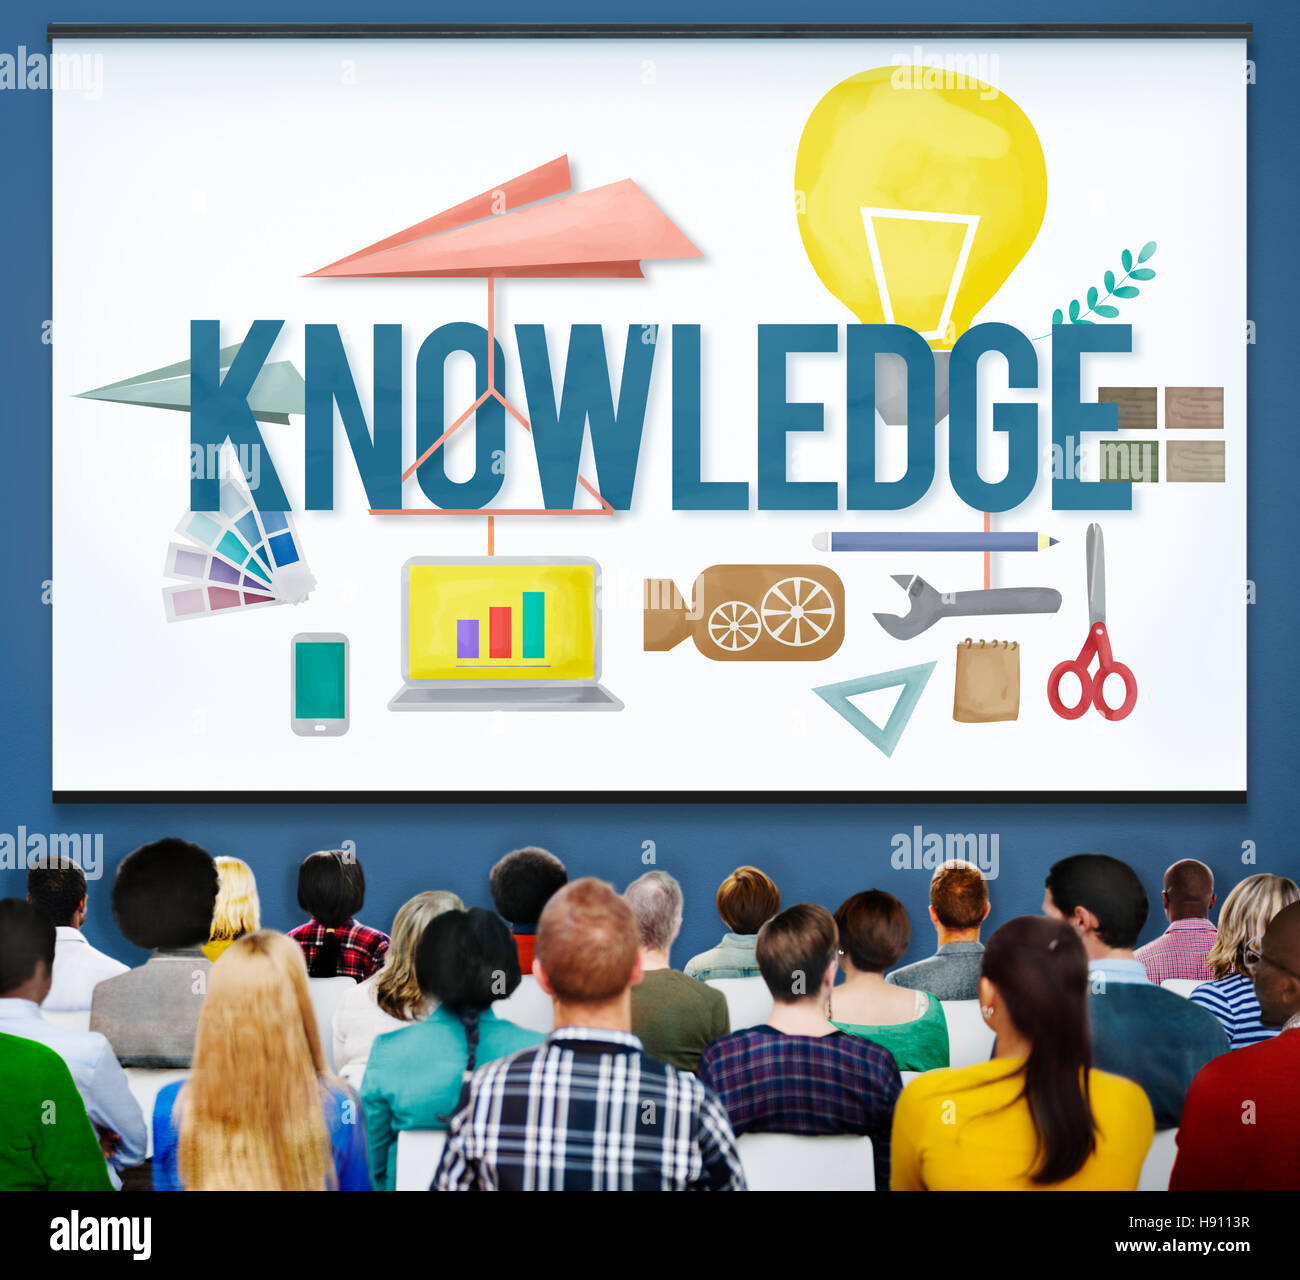 Knowledge School Course Degree Graphics Concept Stock Photo